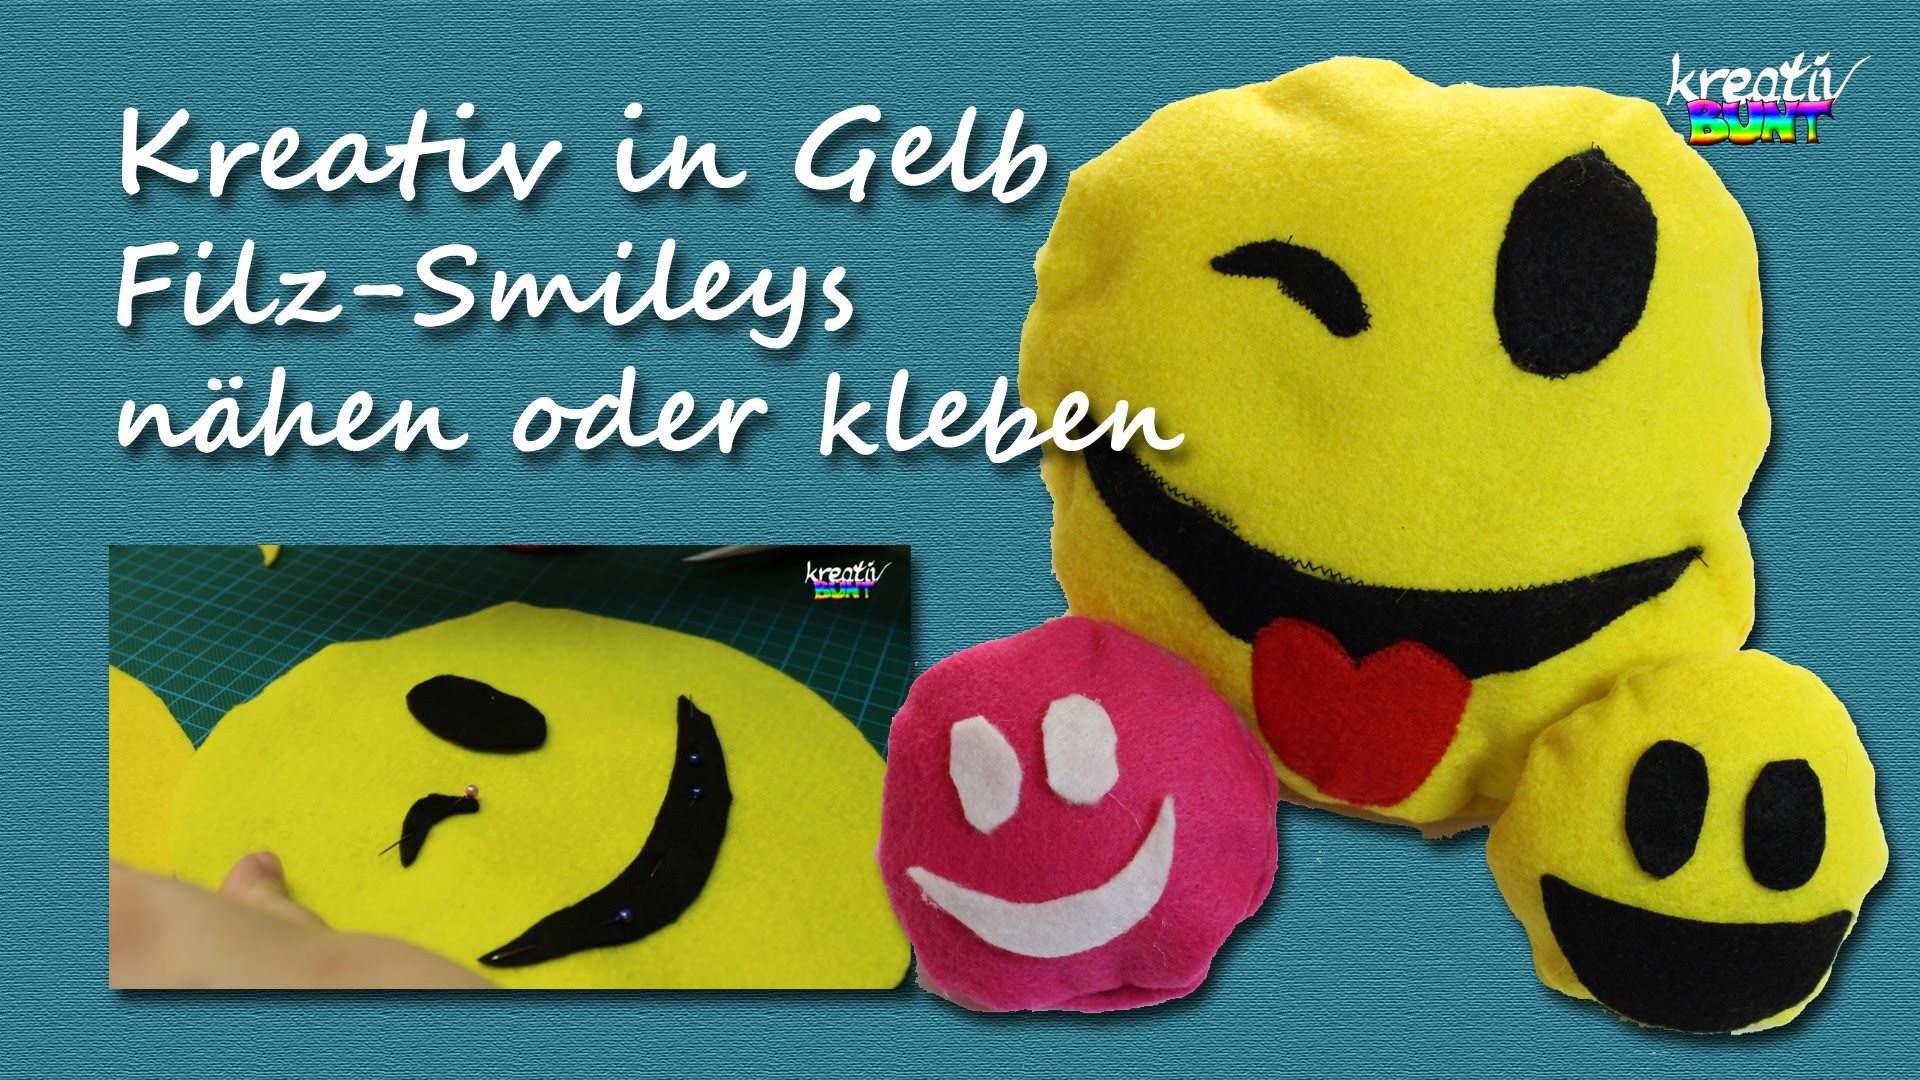 DIY: Kreativ in Gelb: Filz-Smileys basteln (Nähen oder Kleben) | kreativBUNT